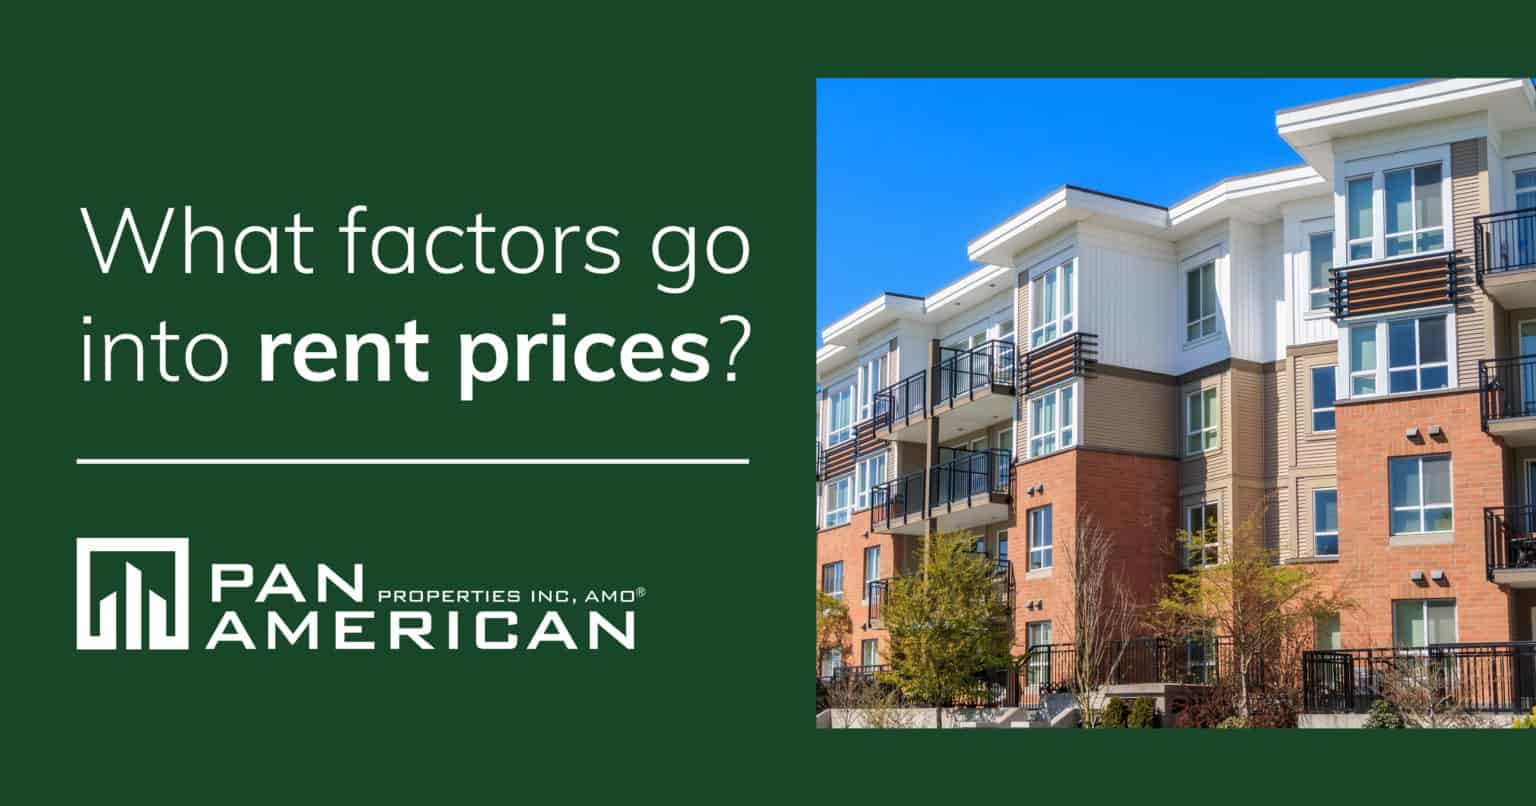 What Factors Go into Rent Prices? Pan American Properties